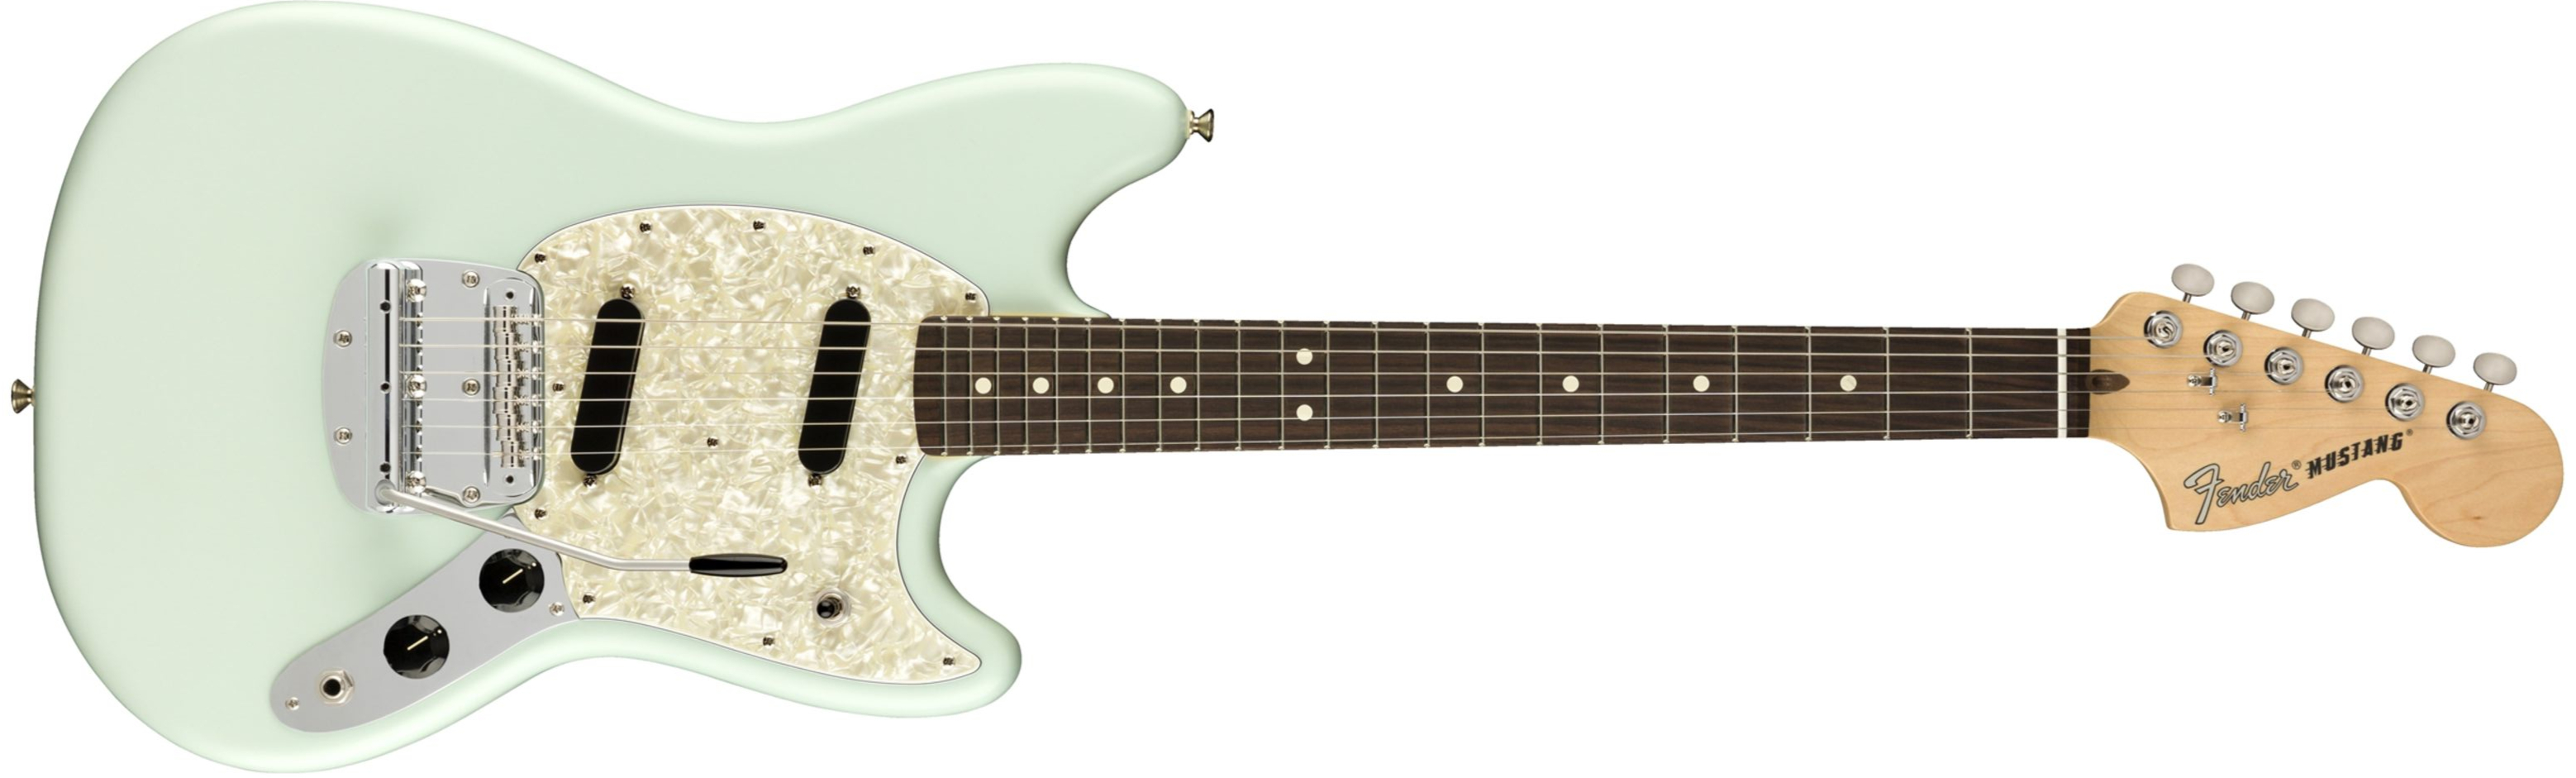 Fender-American-Performer-Mustang-RW-Satin-Sonic-Blue-Front.jpg